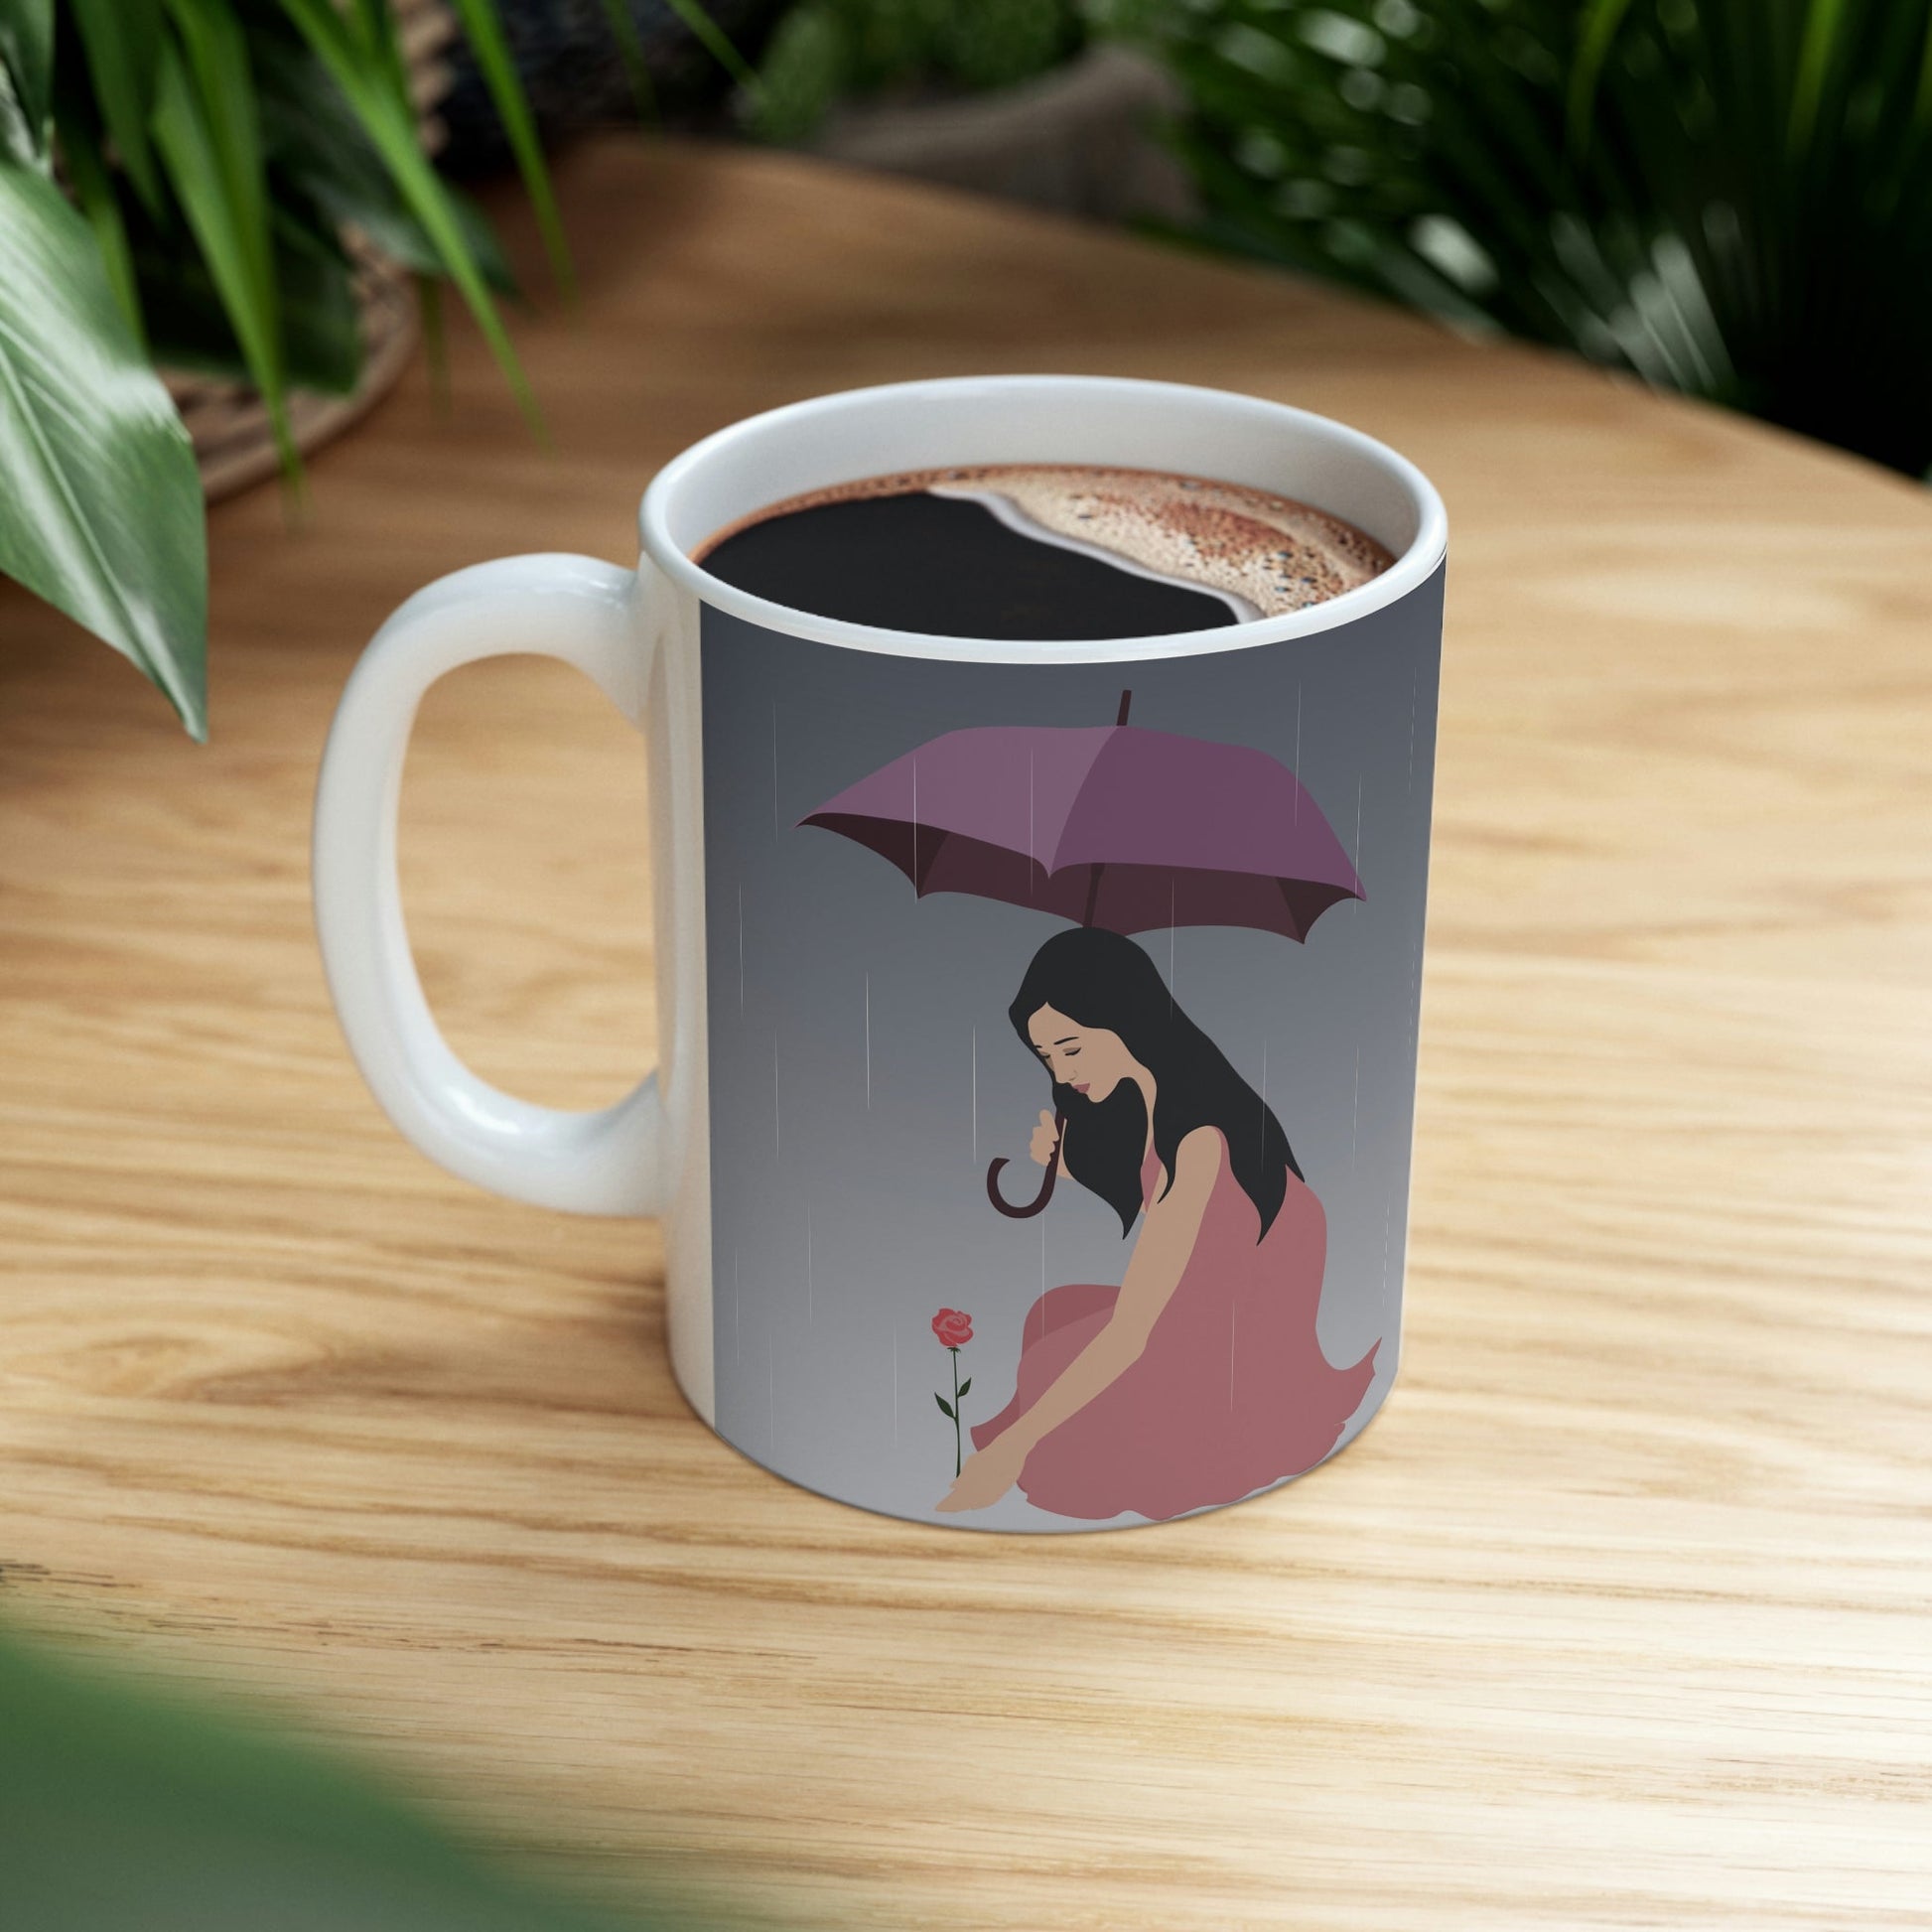 Woman with Umbrella Cartoon Art Walking in the Rain Edgy Graphic Ceramic Mug 11oz Ichaku [Perfect Gifts Selection]